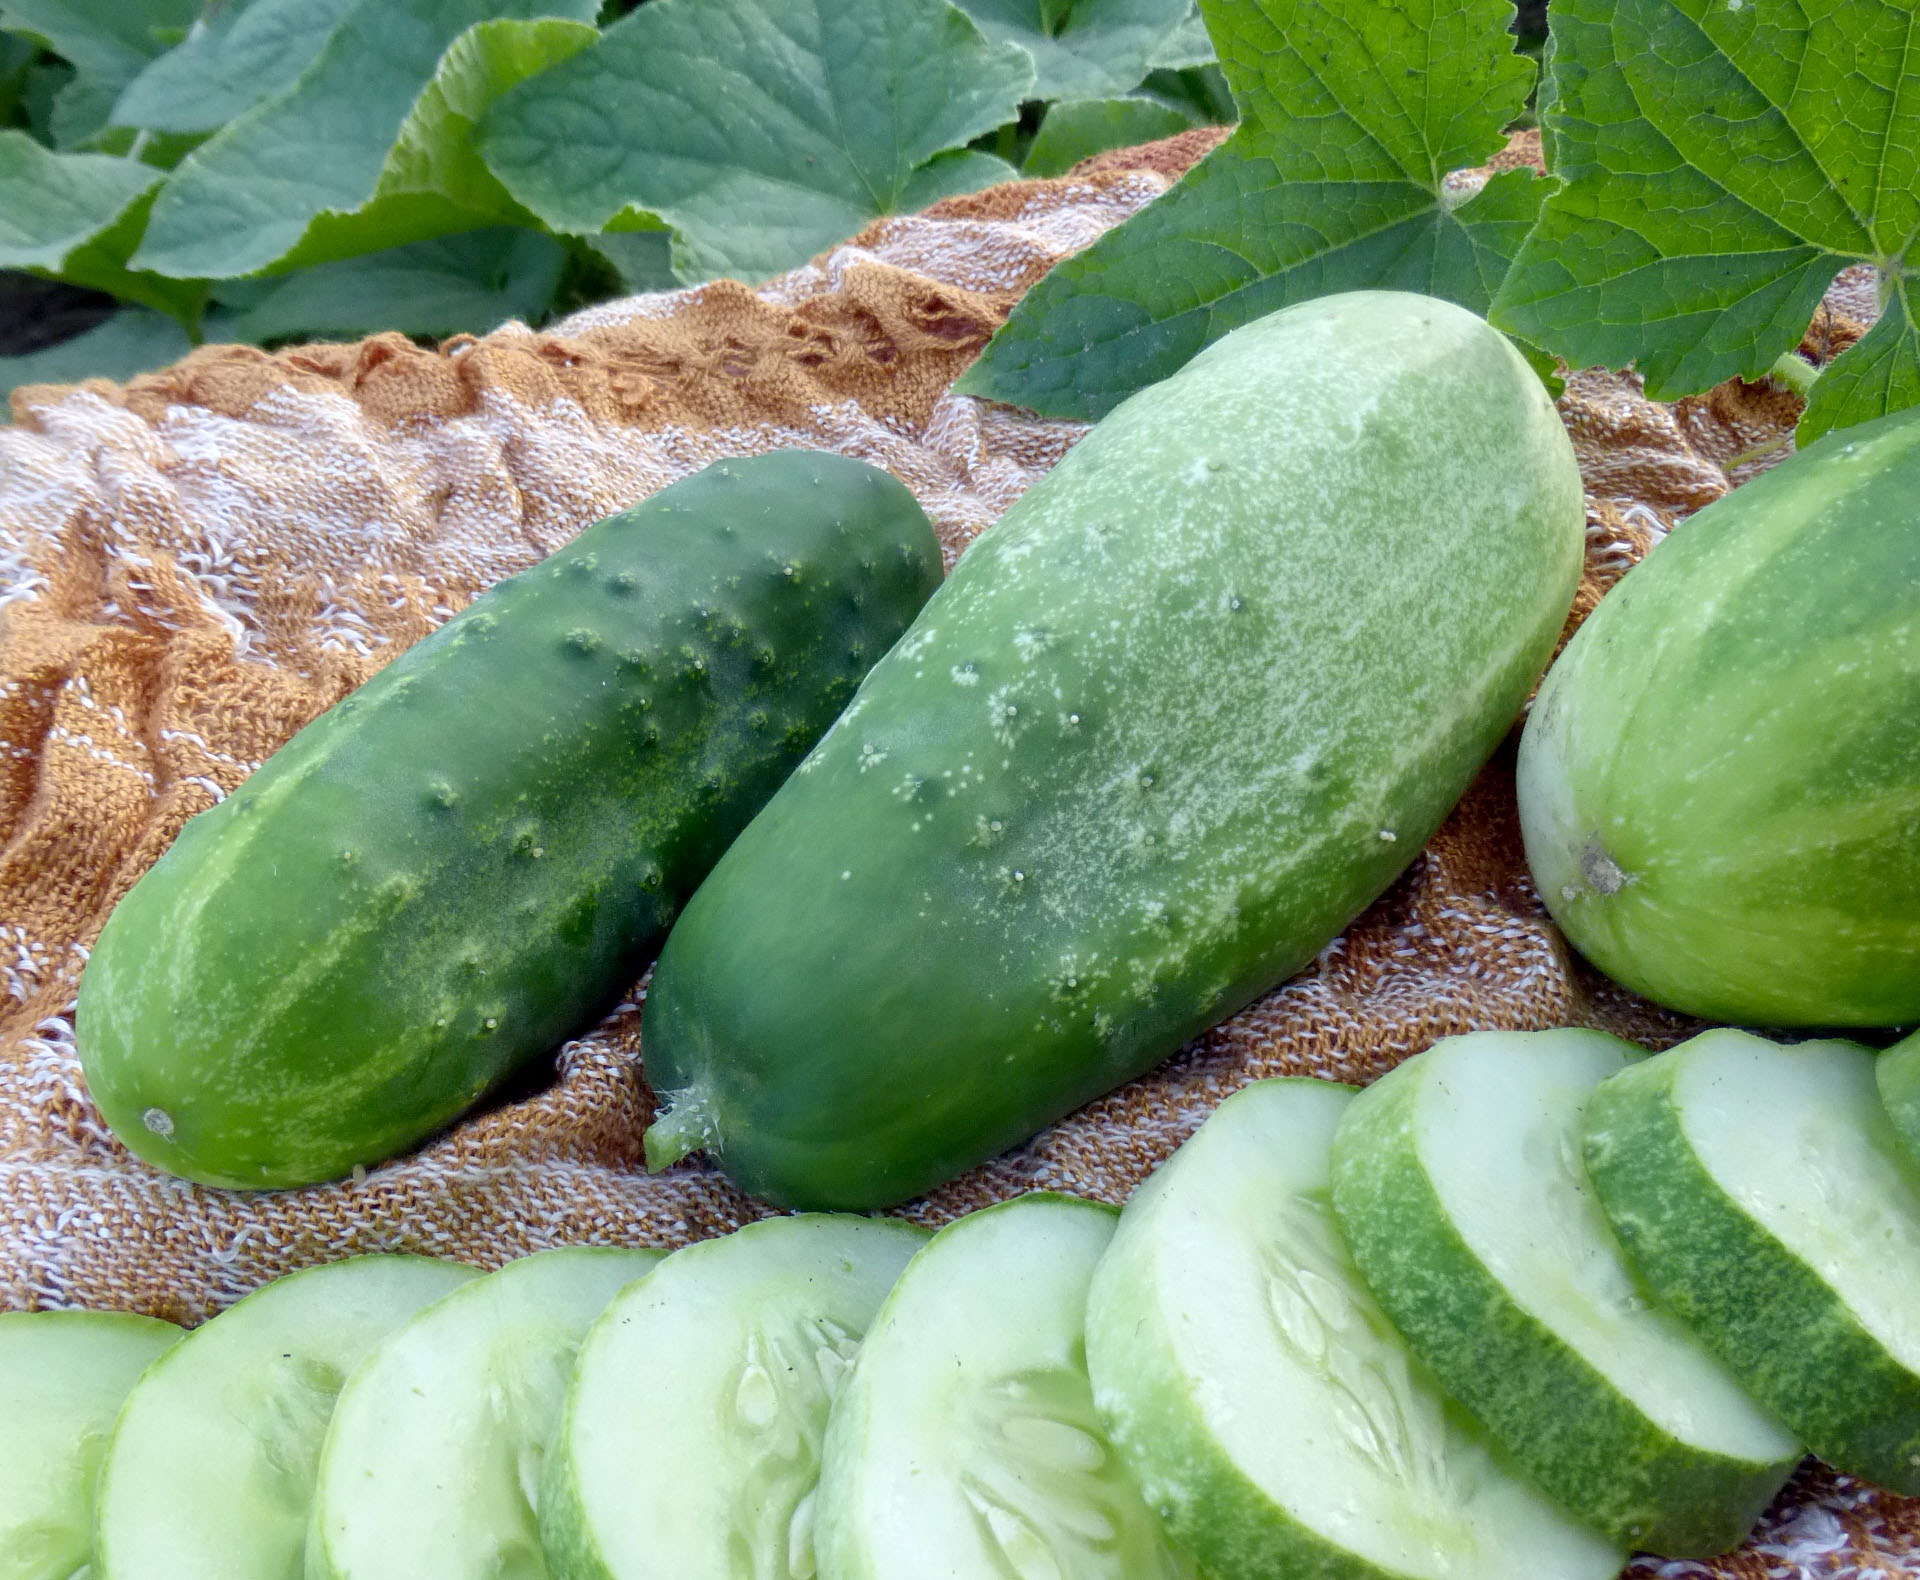 Homemade Pickles Pickling Cucumber